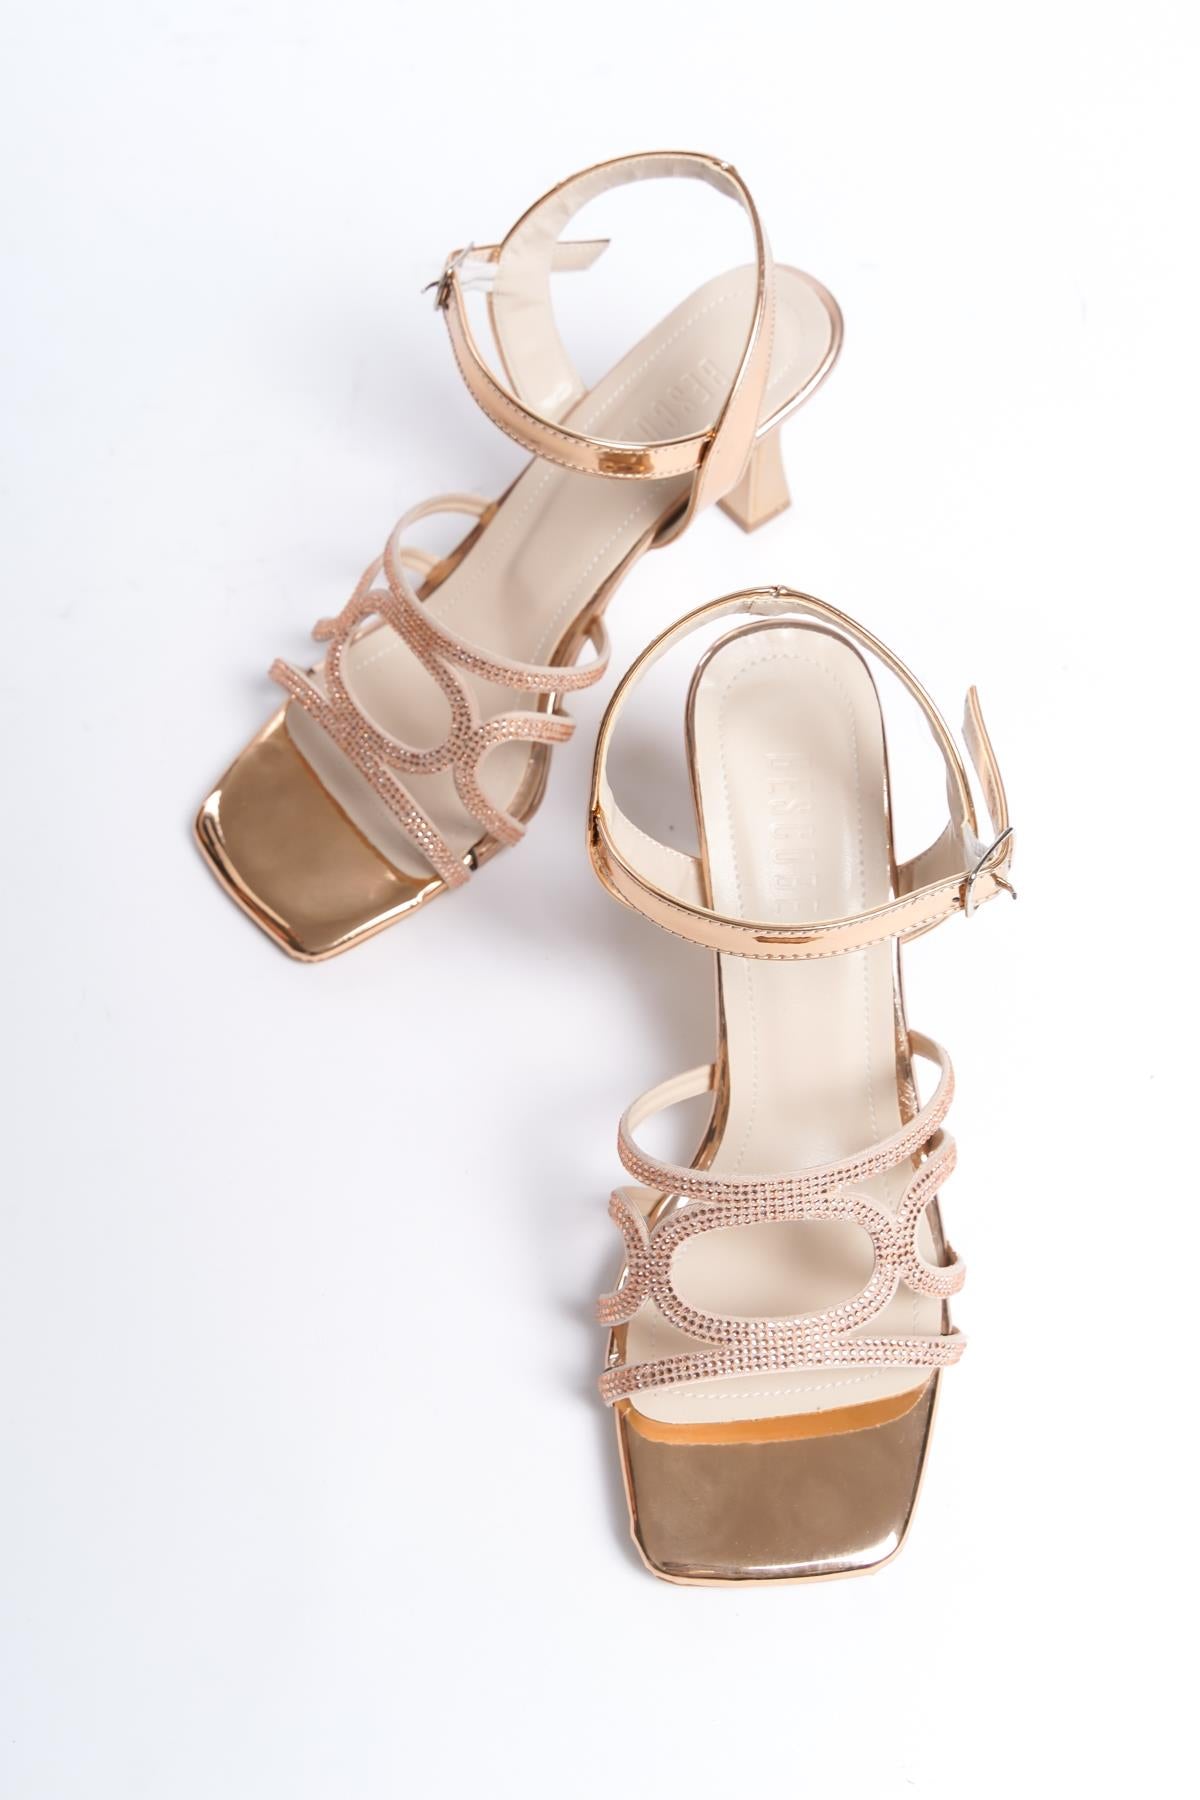 Women's Patent Leather Gold Thin Heel Stone Sandals 8 cm Heel - STREETMODE™